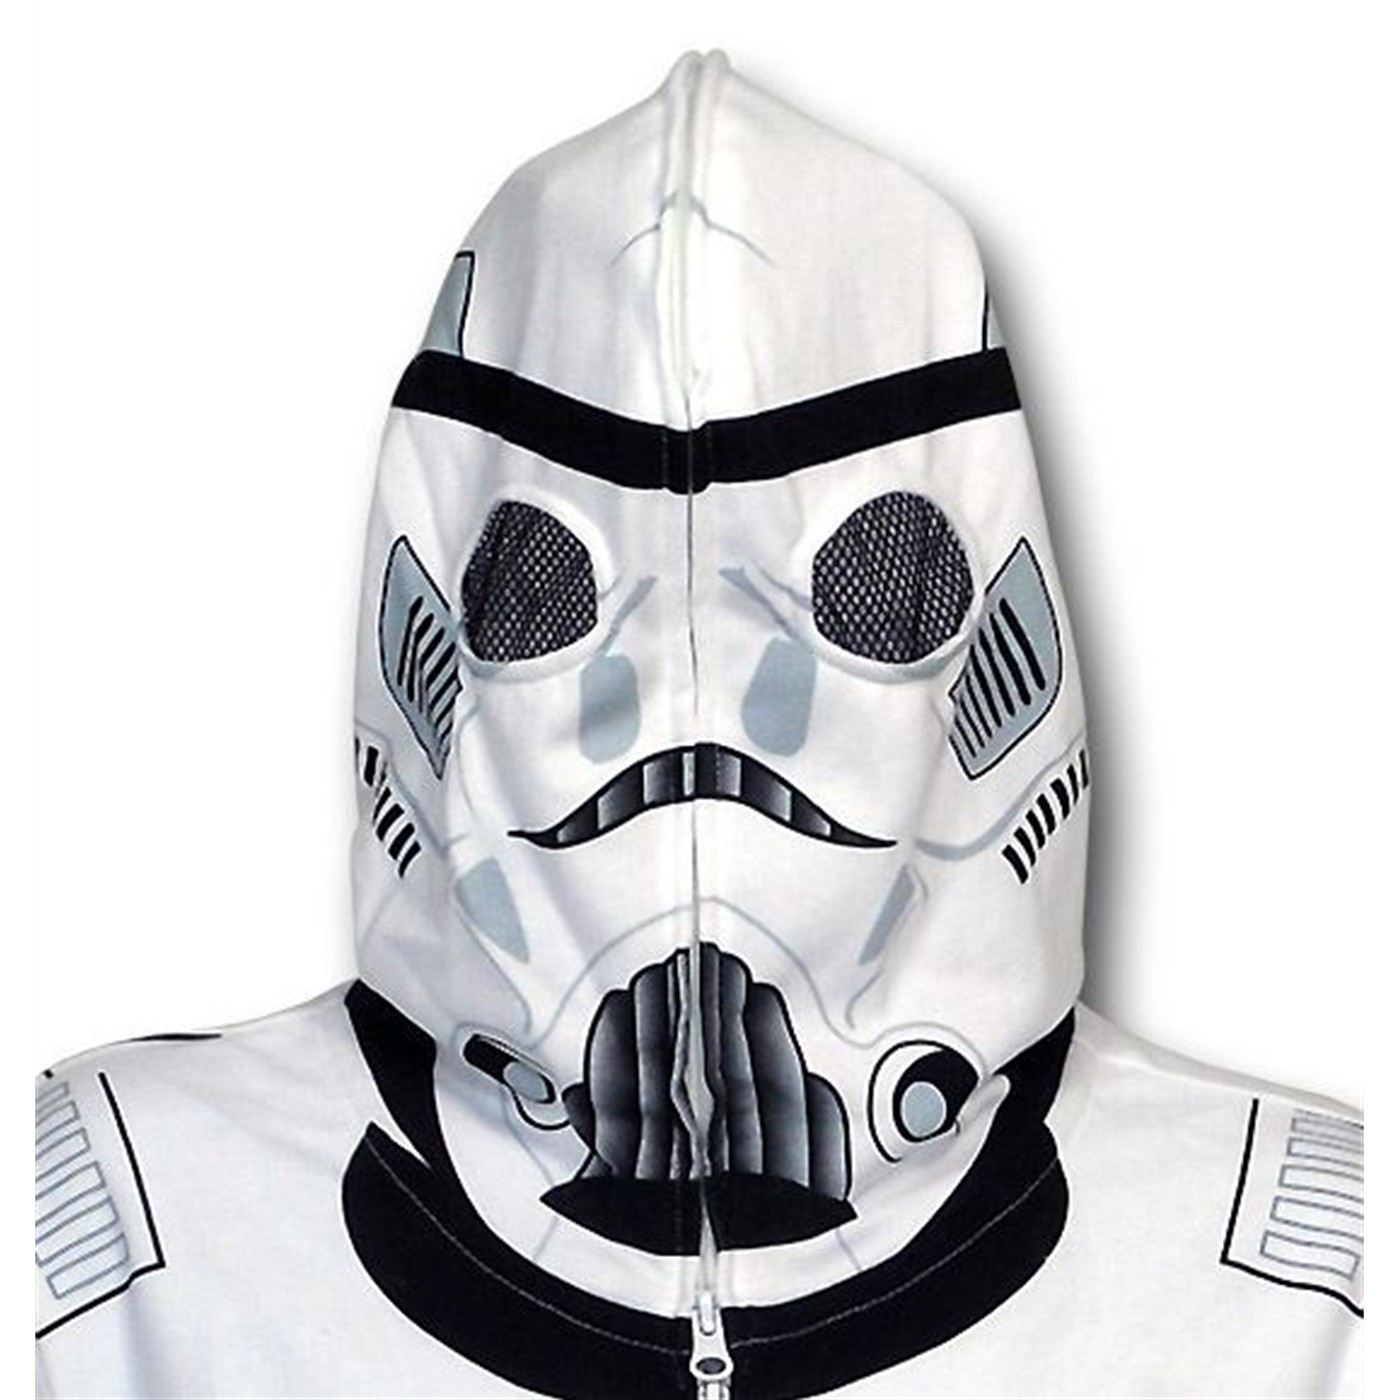 Star Wars Stormtrooper Zip-Up Costume Hoodie